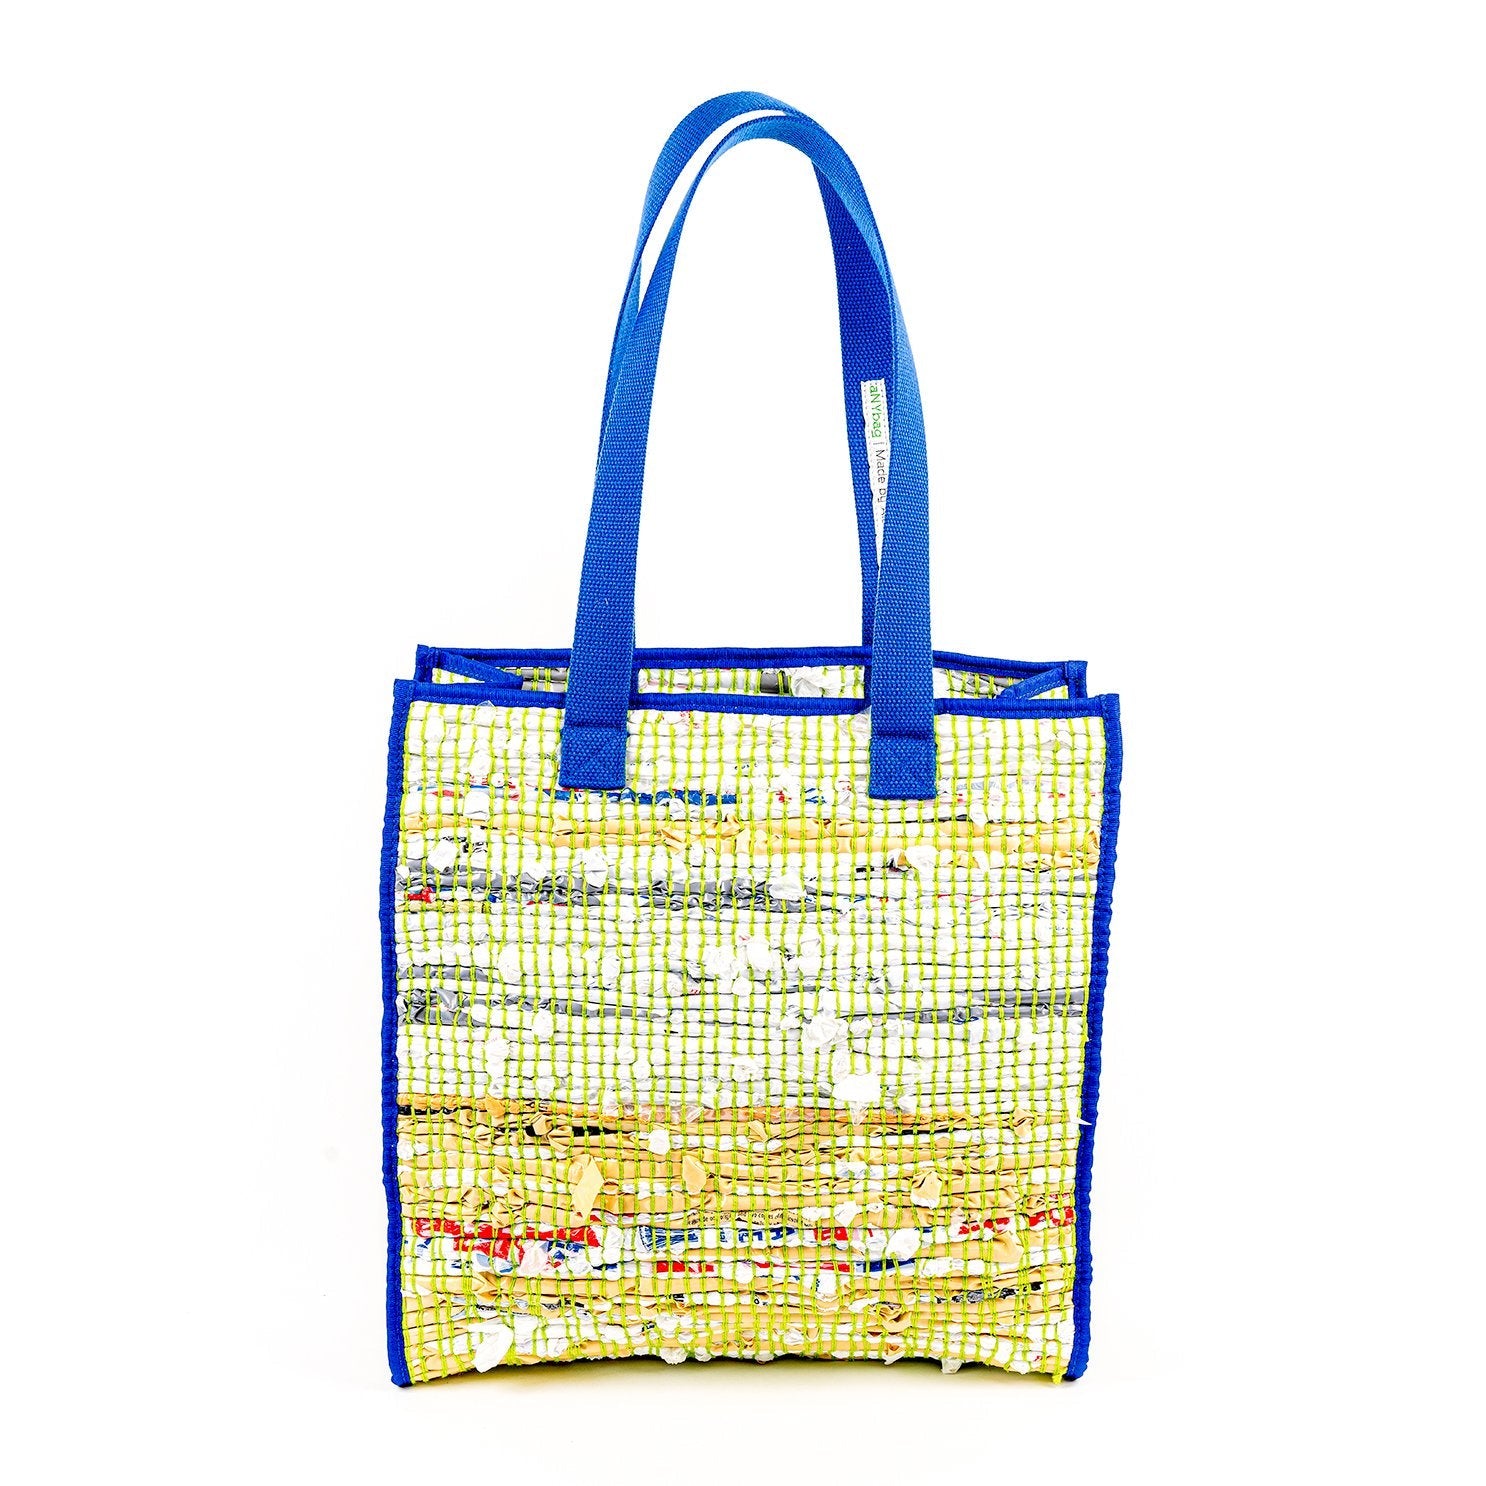 Bag-Accented Bag Designs : plastic bag